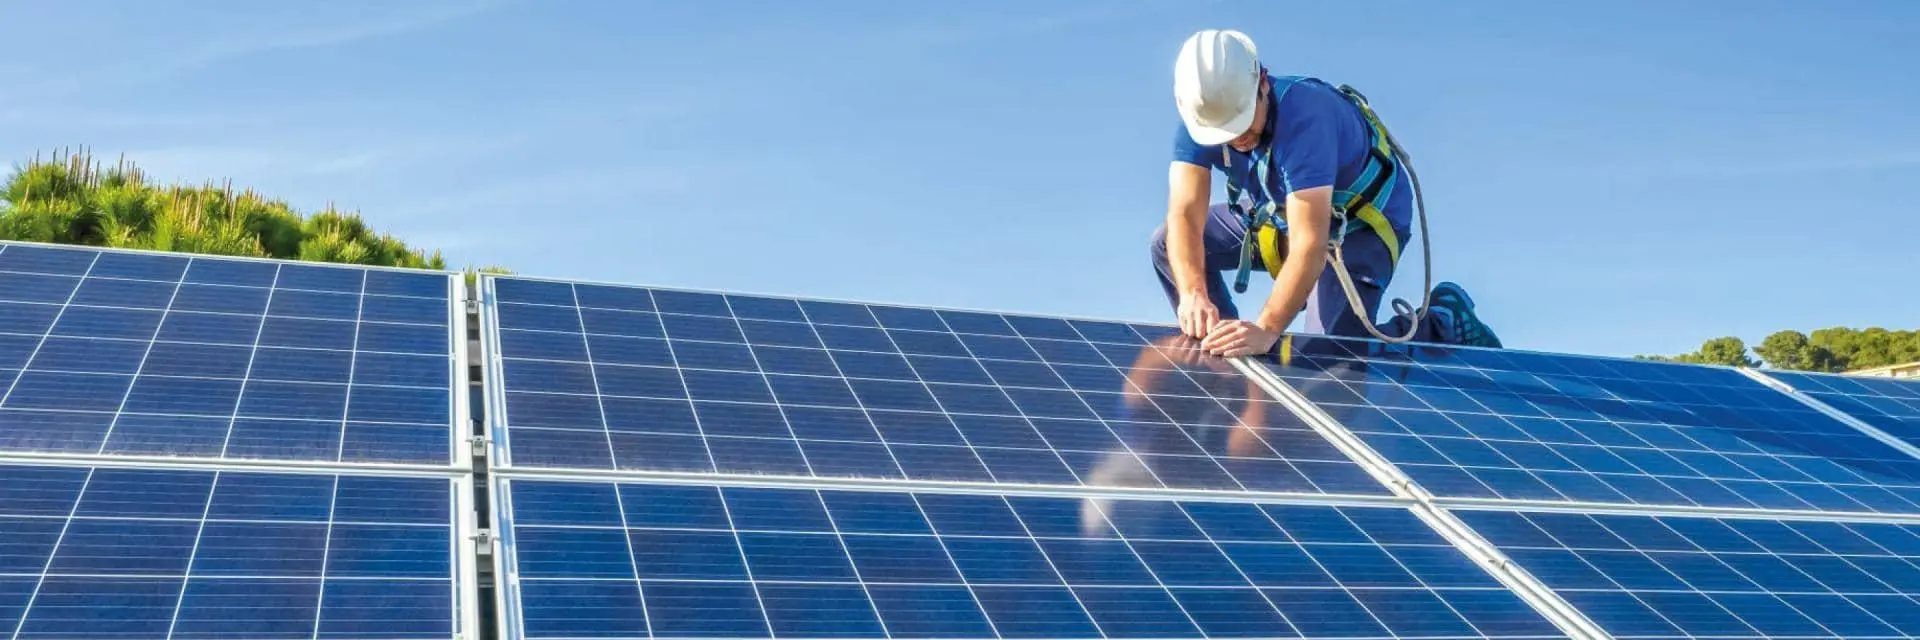 barclays partner finance solar panels - How do I contact Barclays Partner Finance